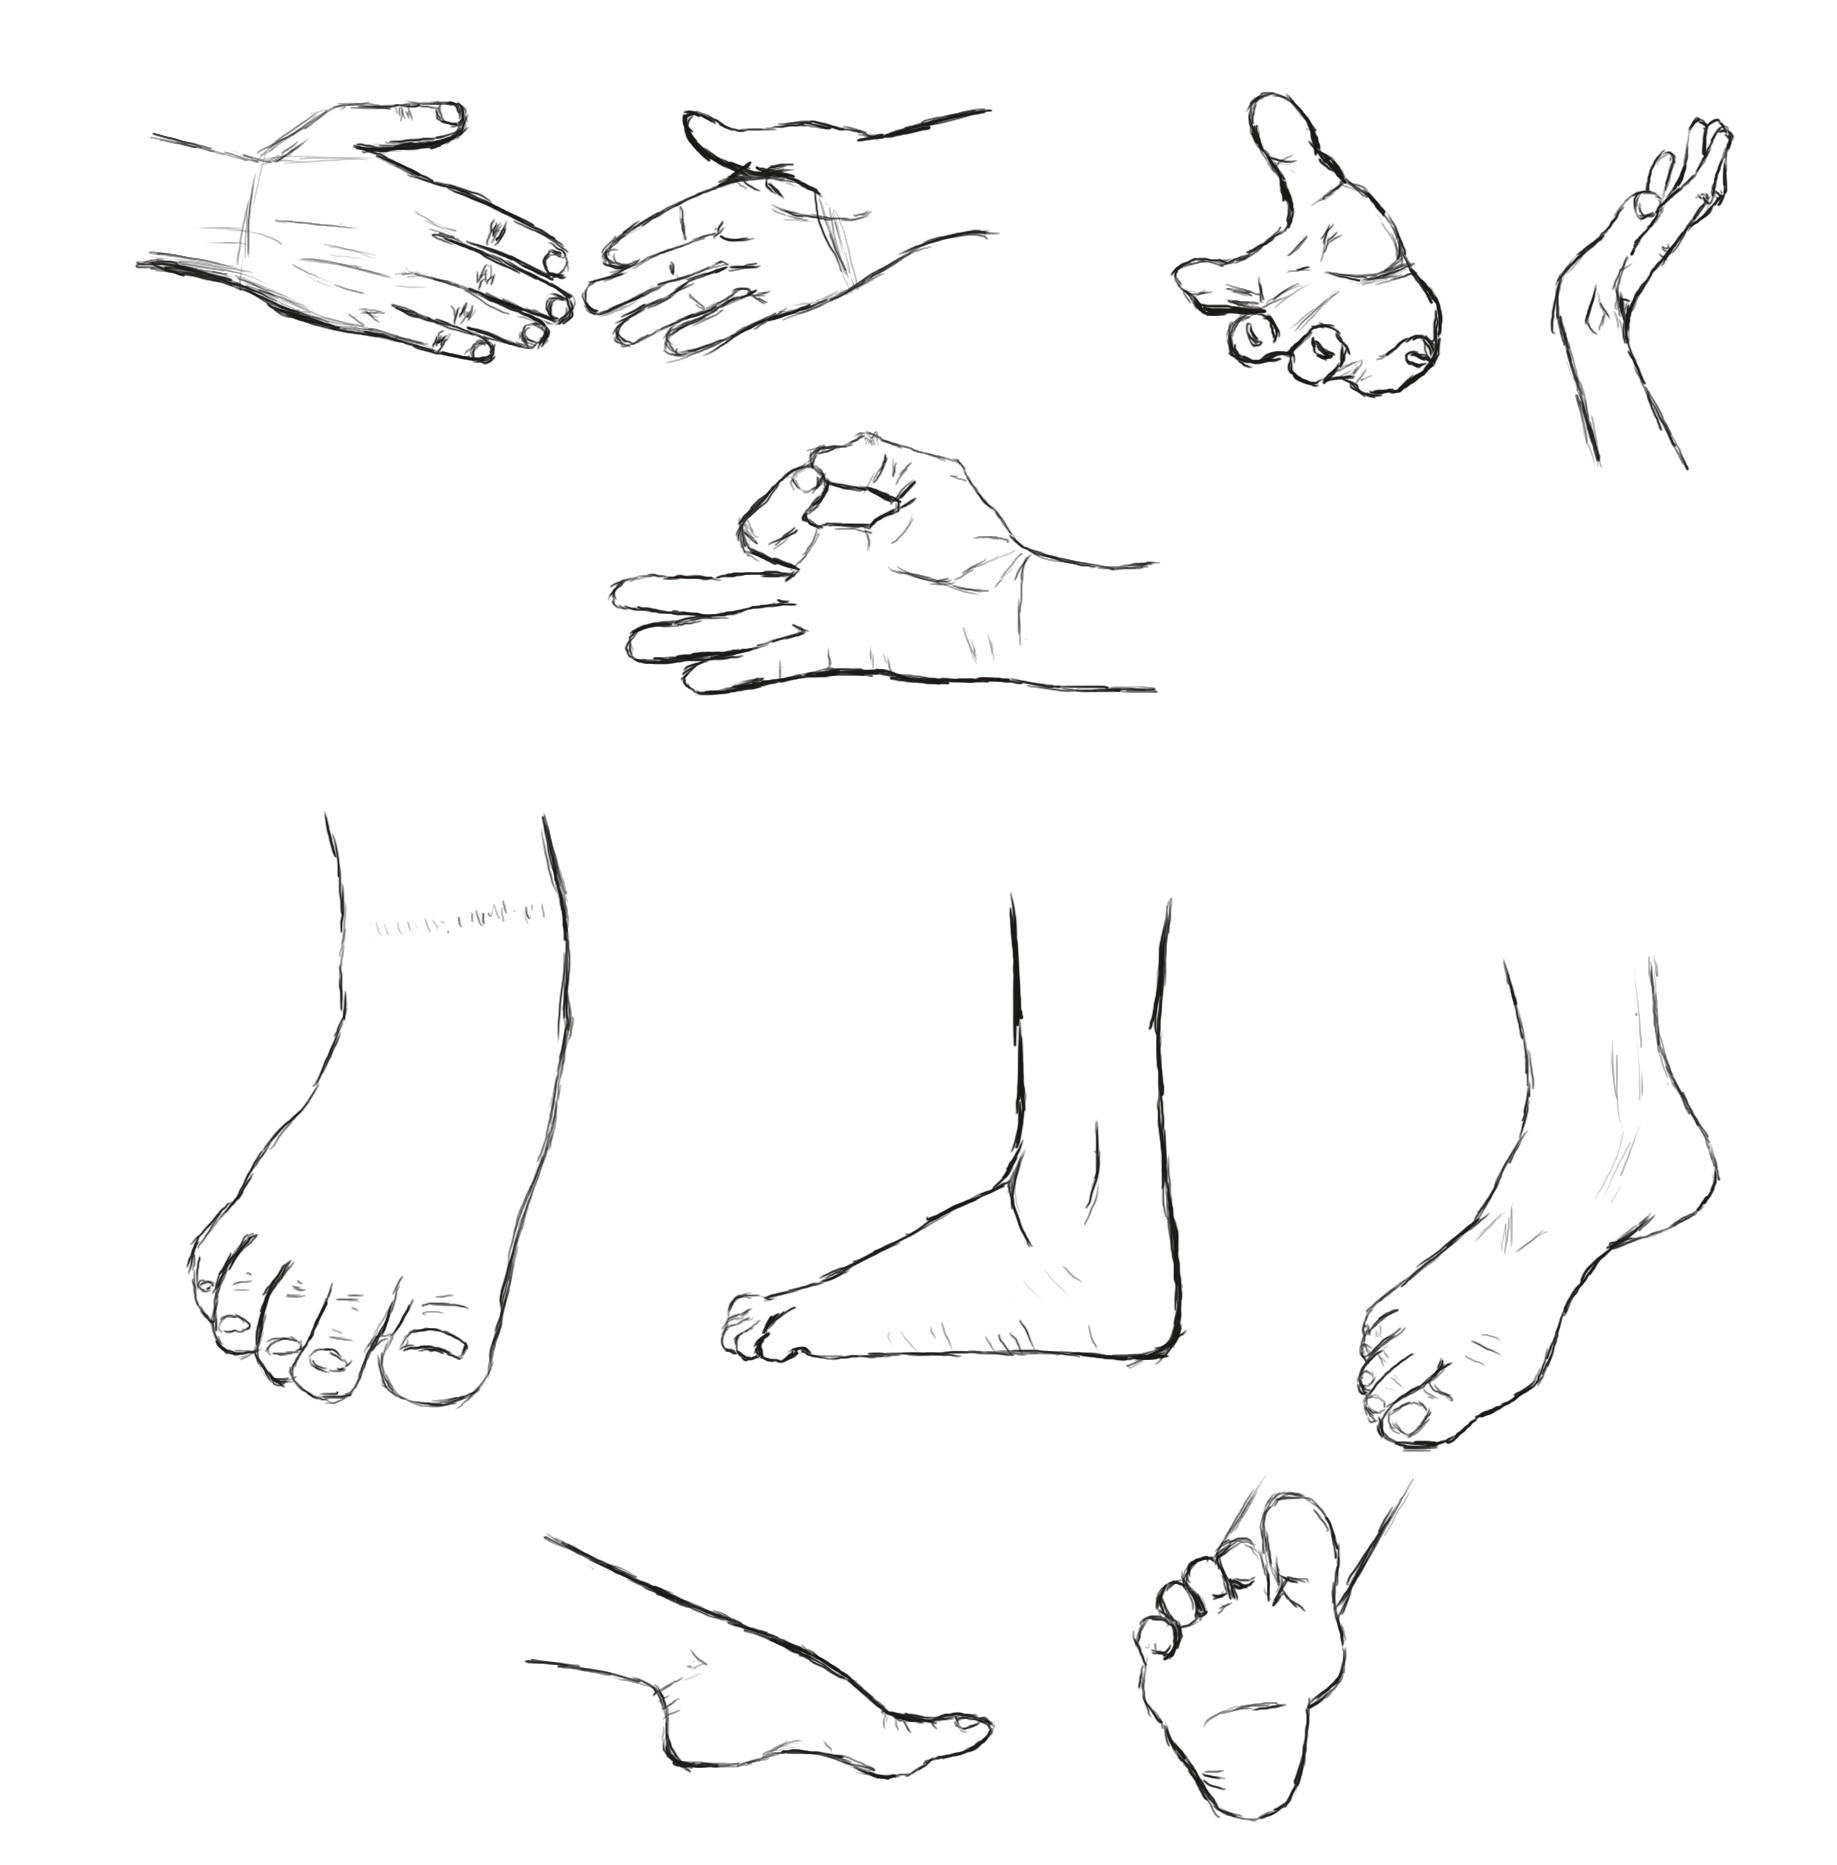 ArtStation - Hands and feet